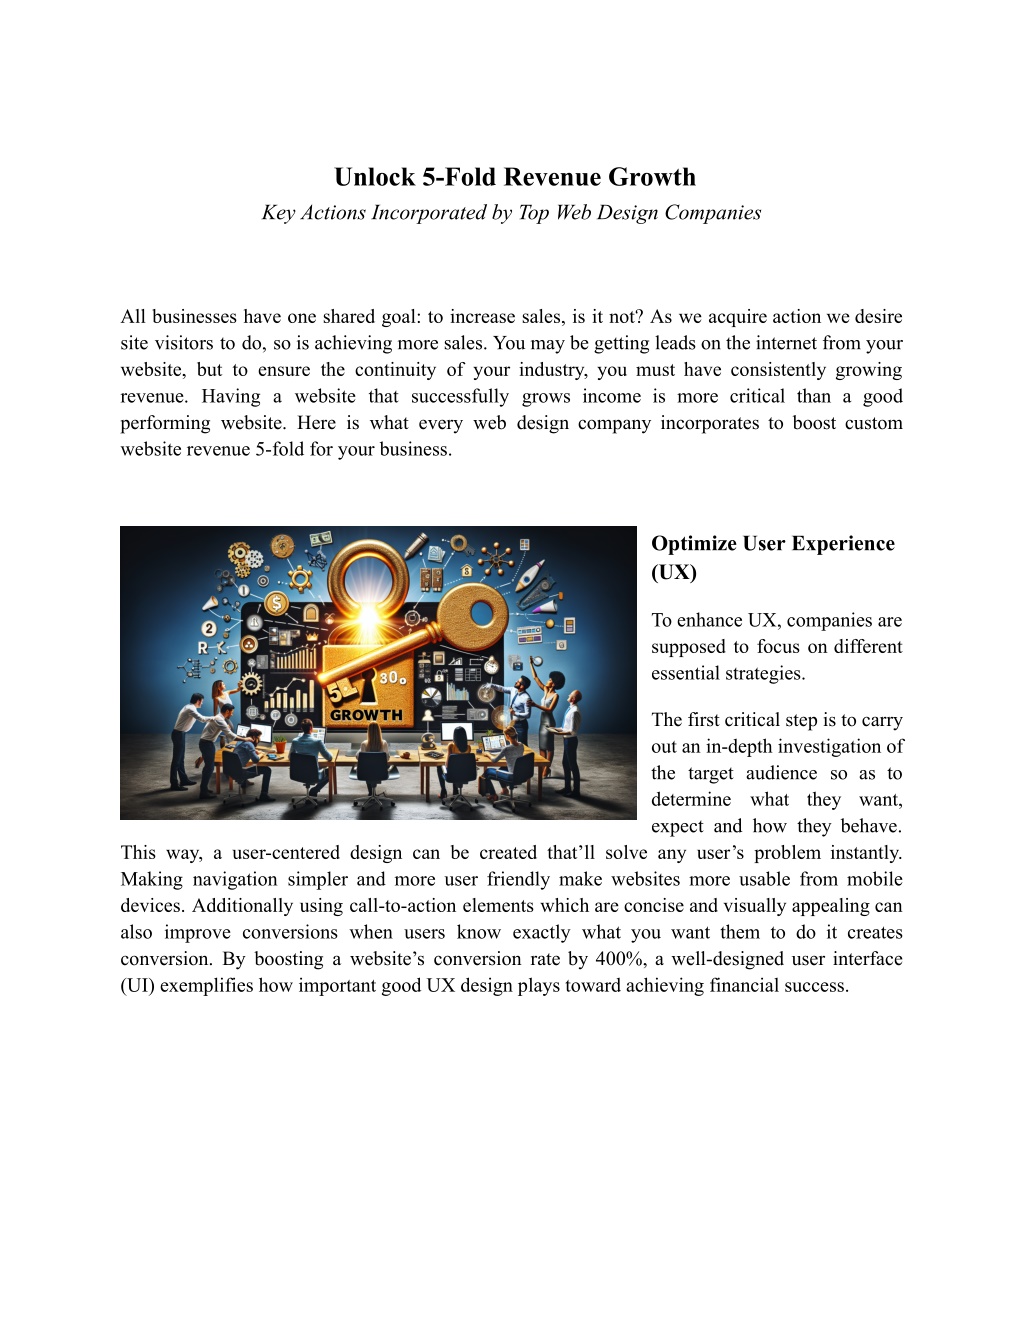 unlock 5 fold revenue growth key actions l.w